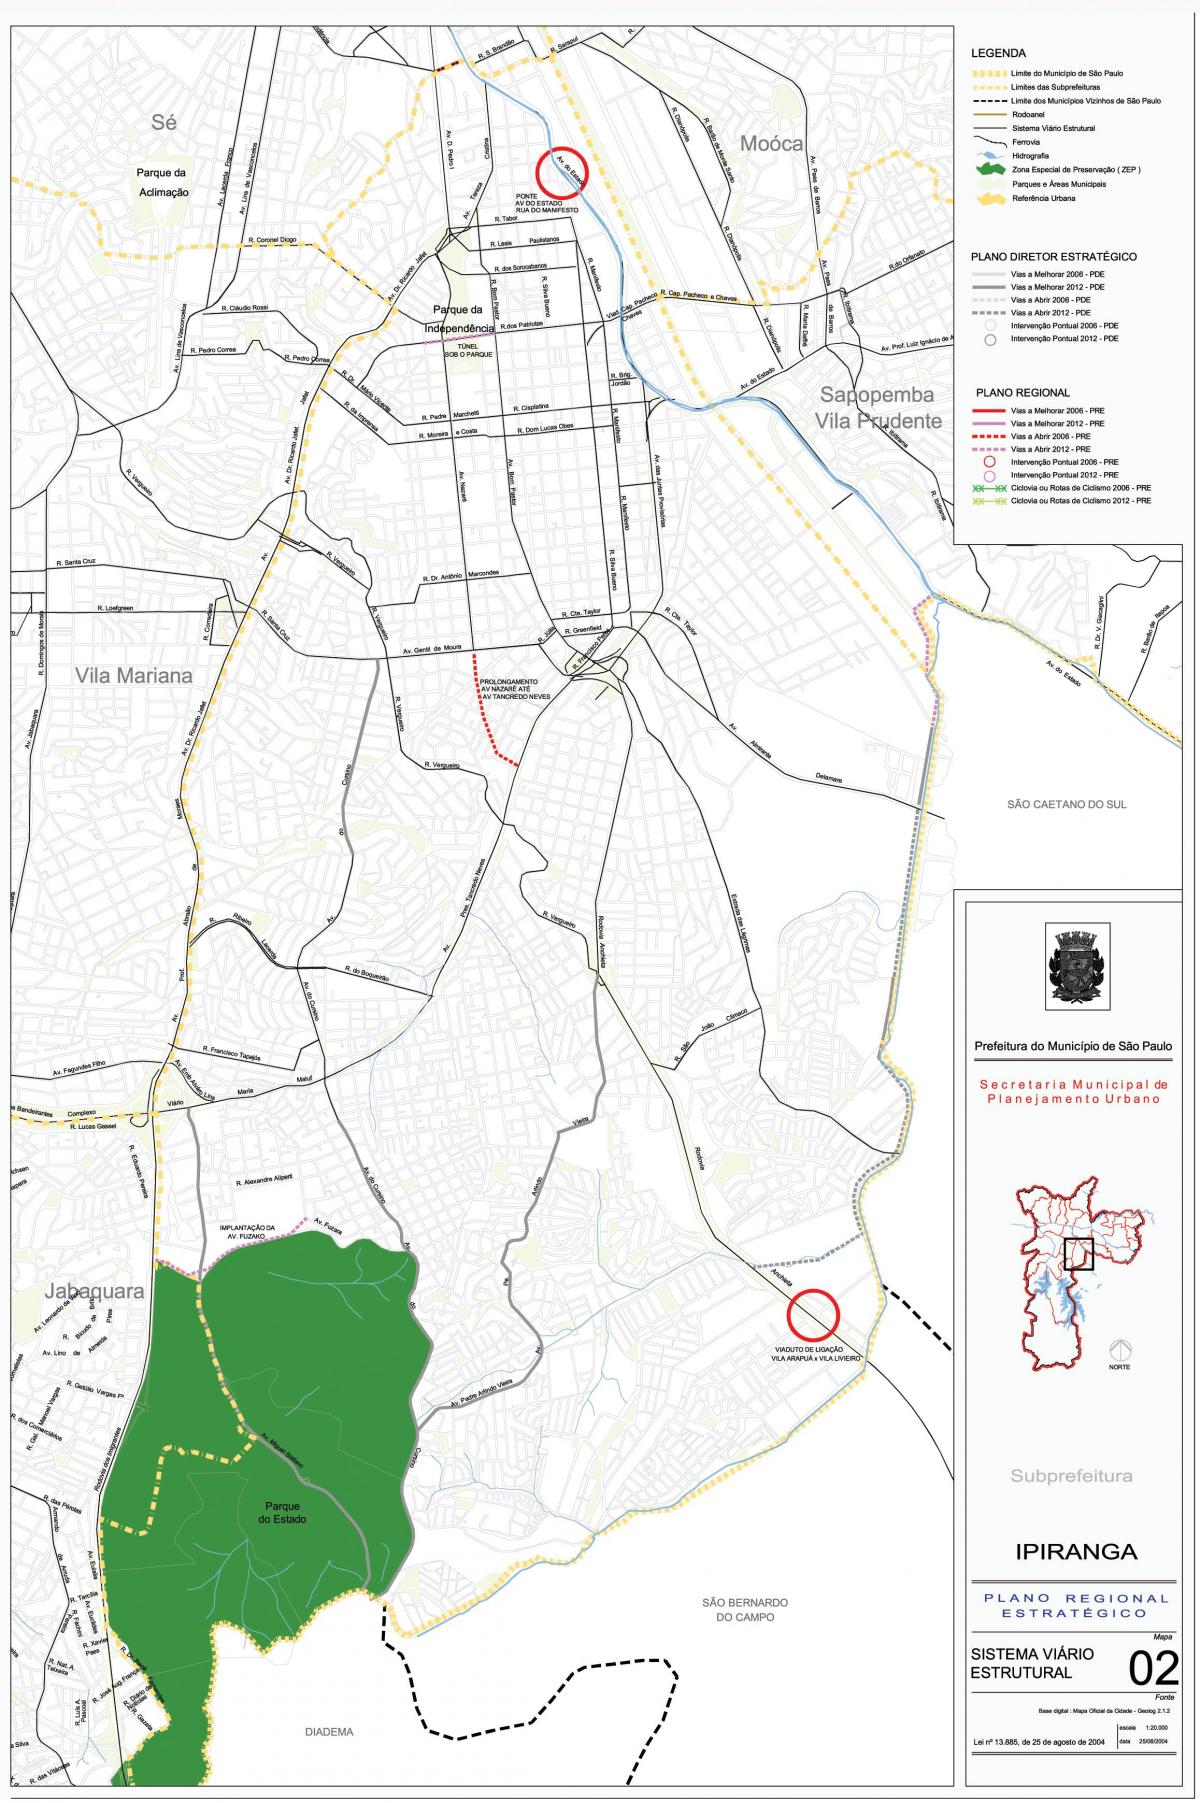 Mapa Ipiranga São Paulo - Errepideak